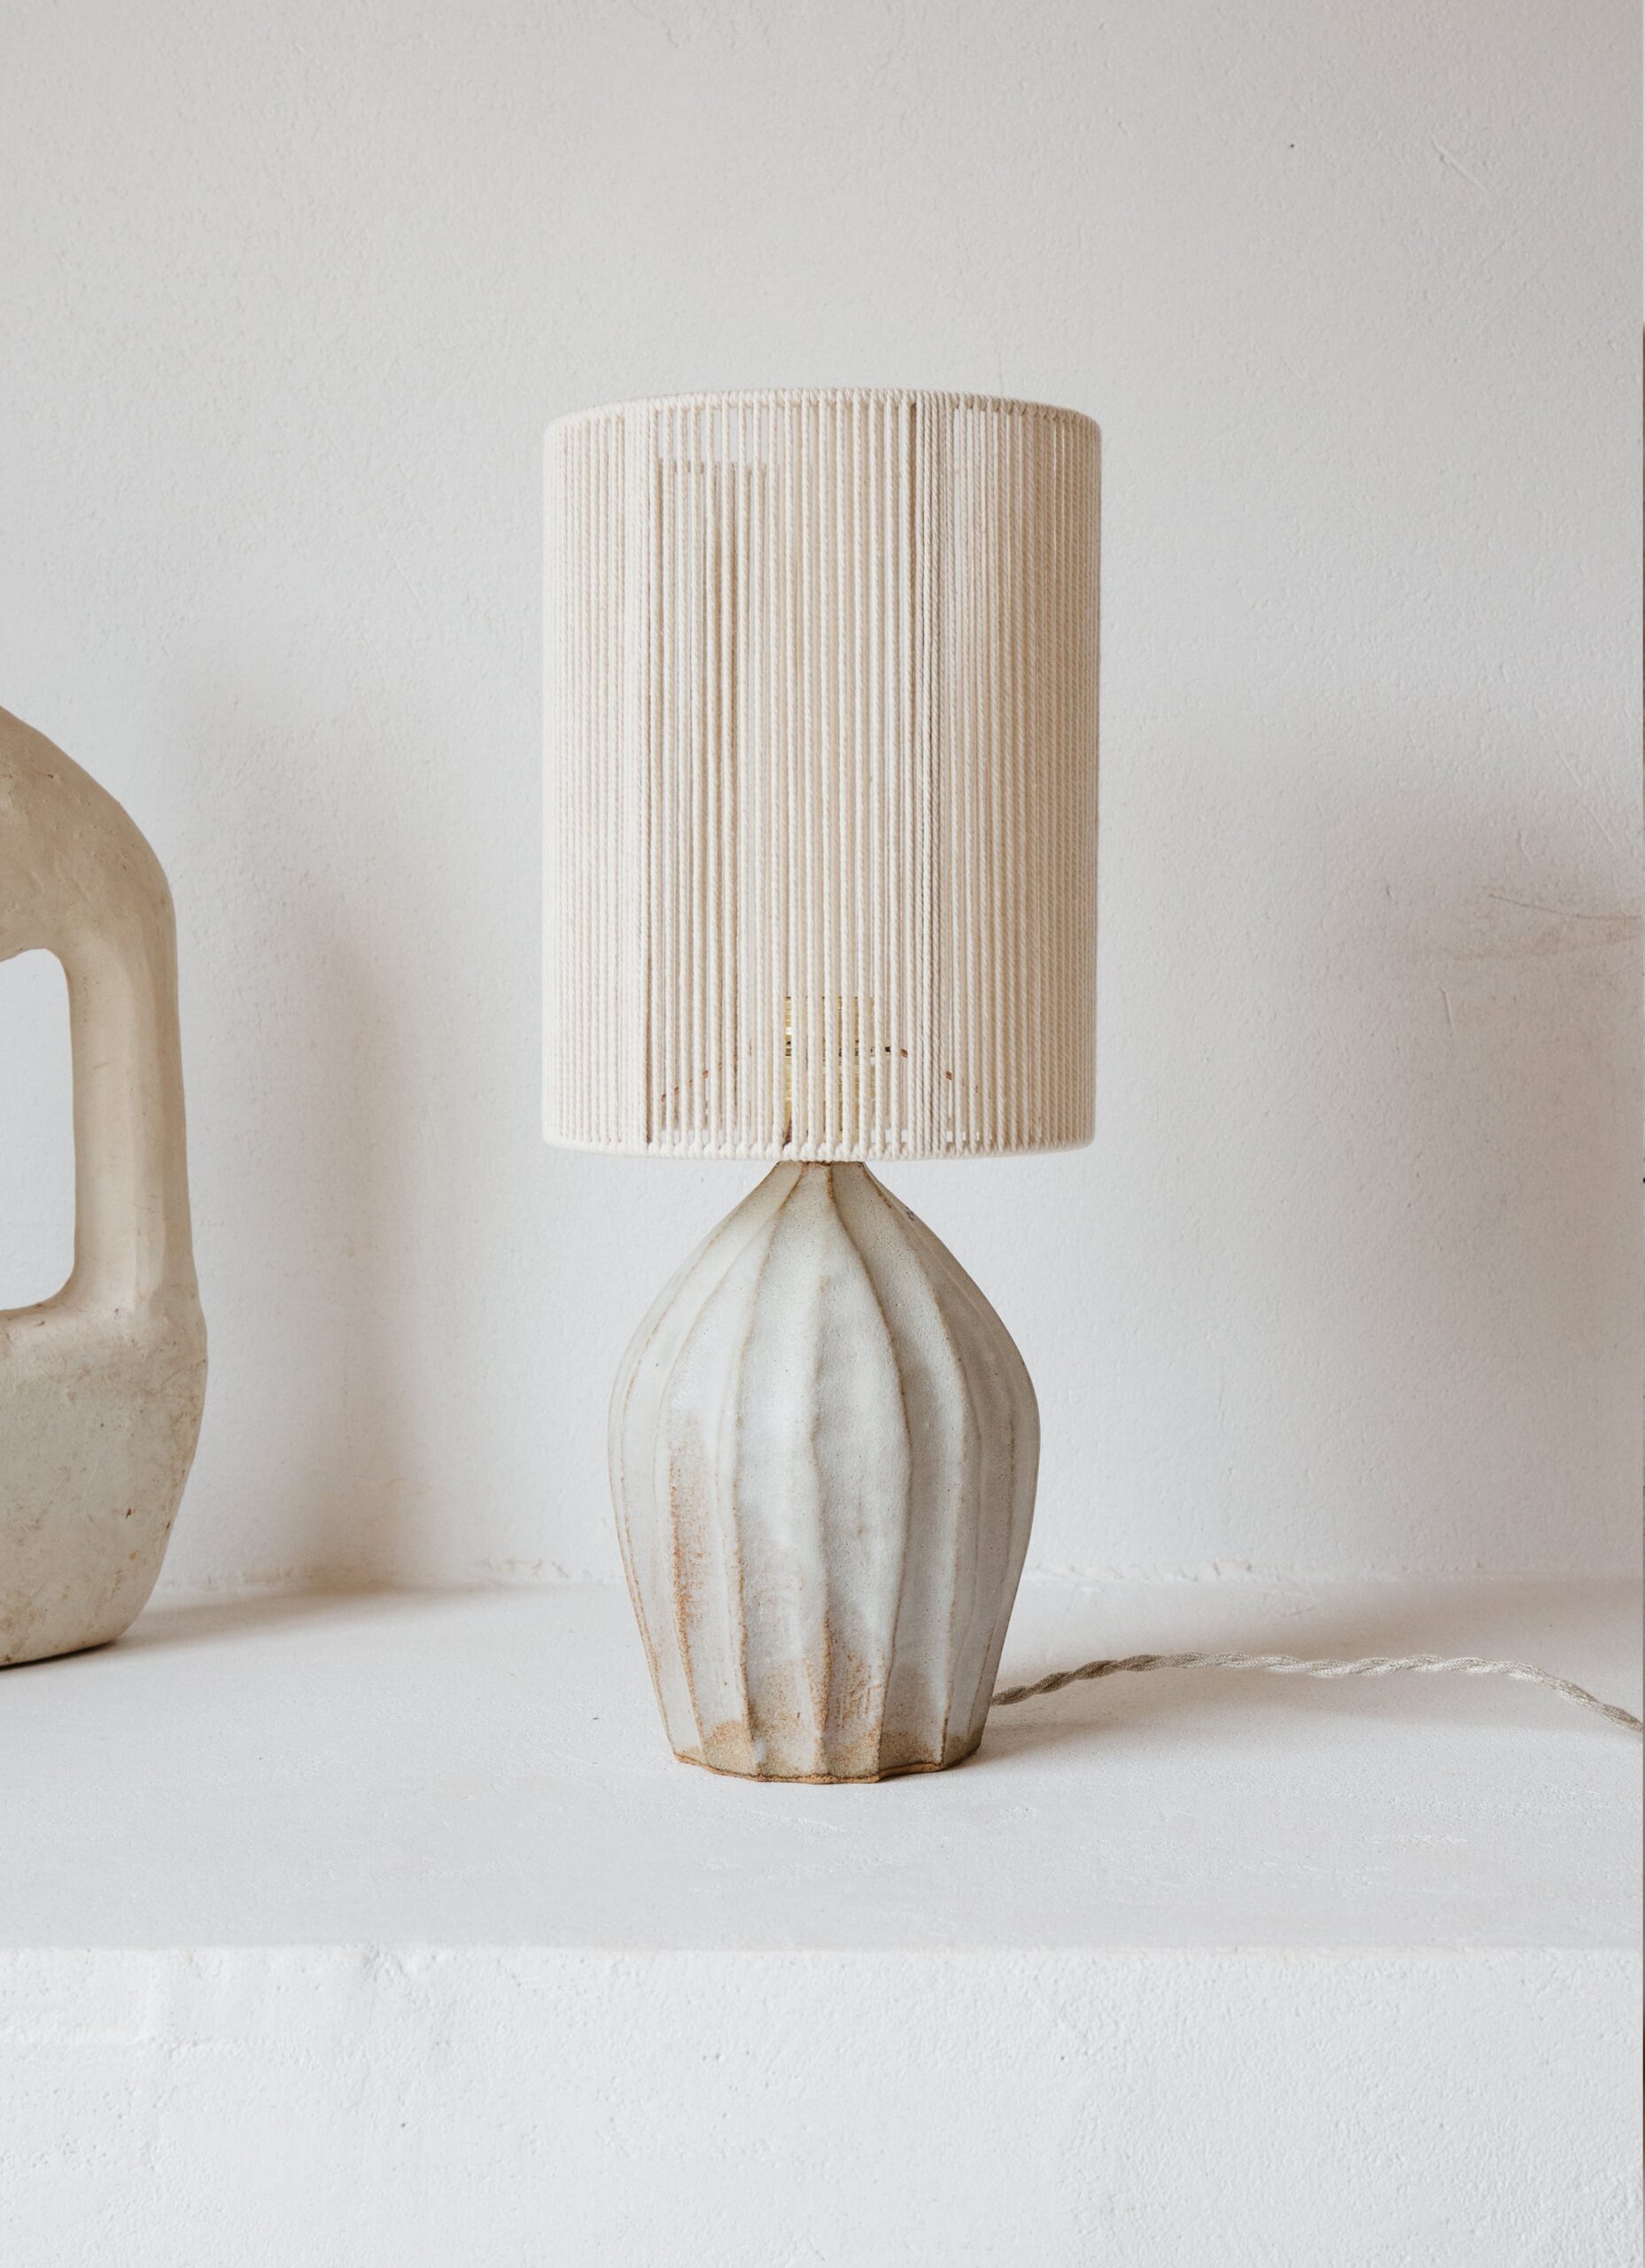 Gres Ceramics - Handmade Stoneware Lamp - Orbe - Smooth White Glaze and Cotton Lampshade